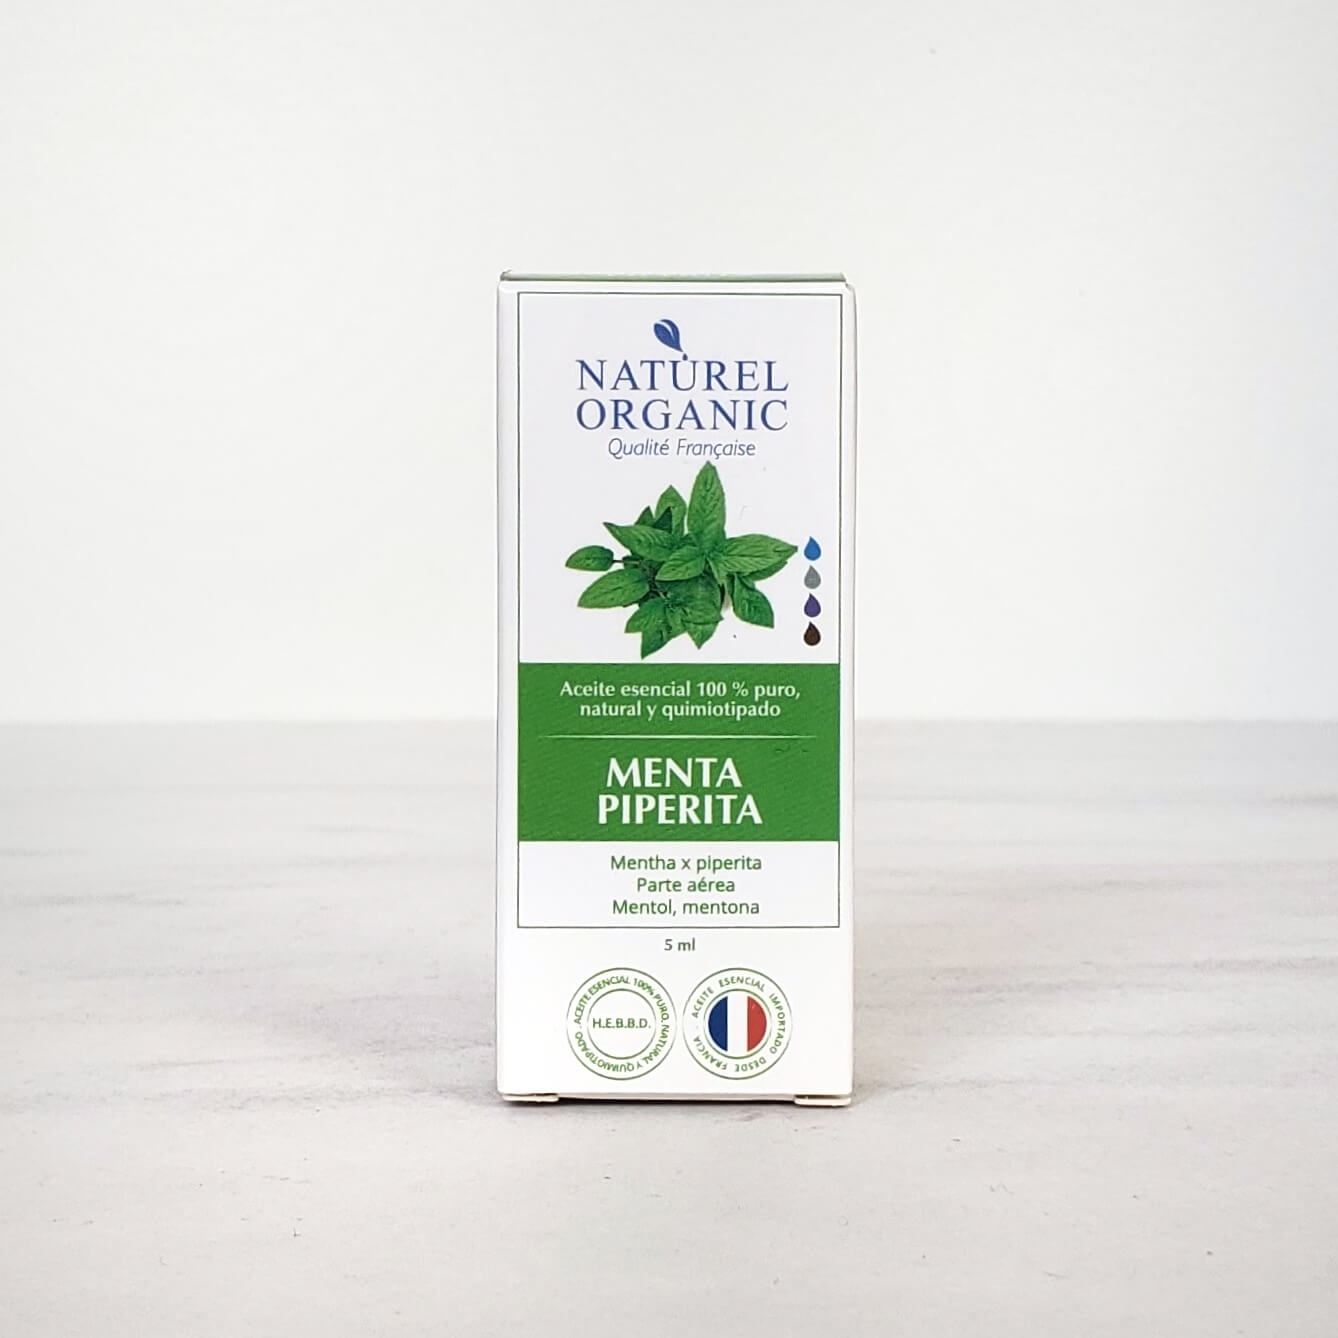 Aceite Esencial Menta Piperita, 5 ml, marca Naturel Organic